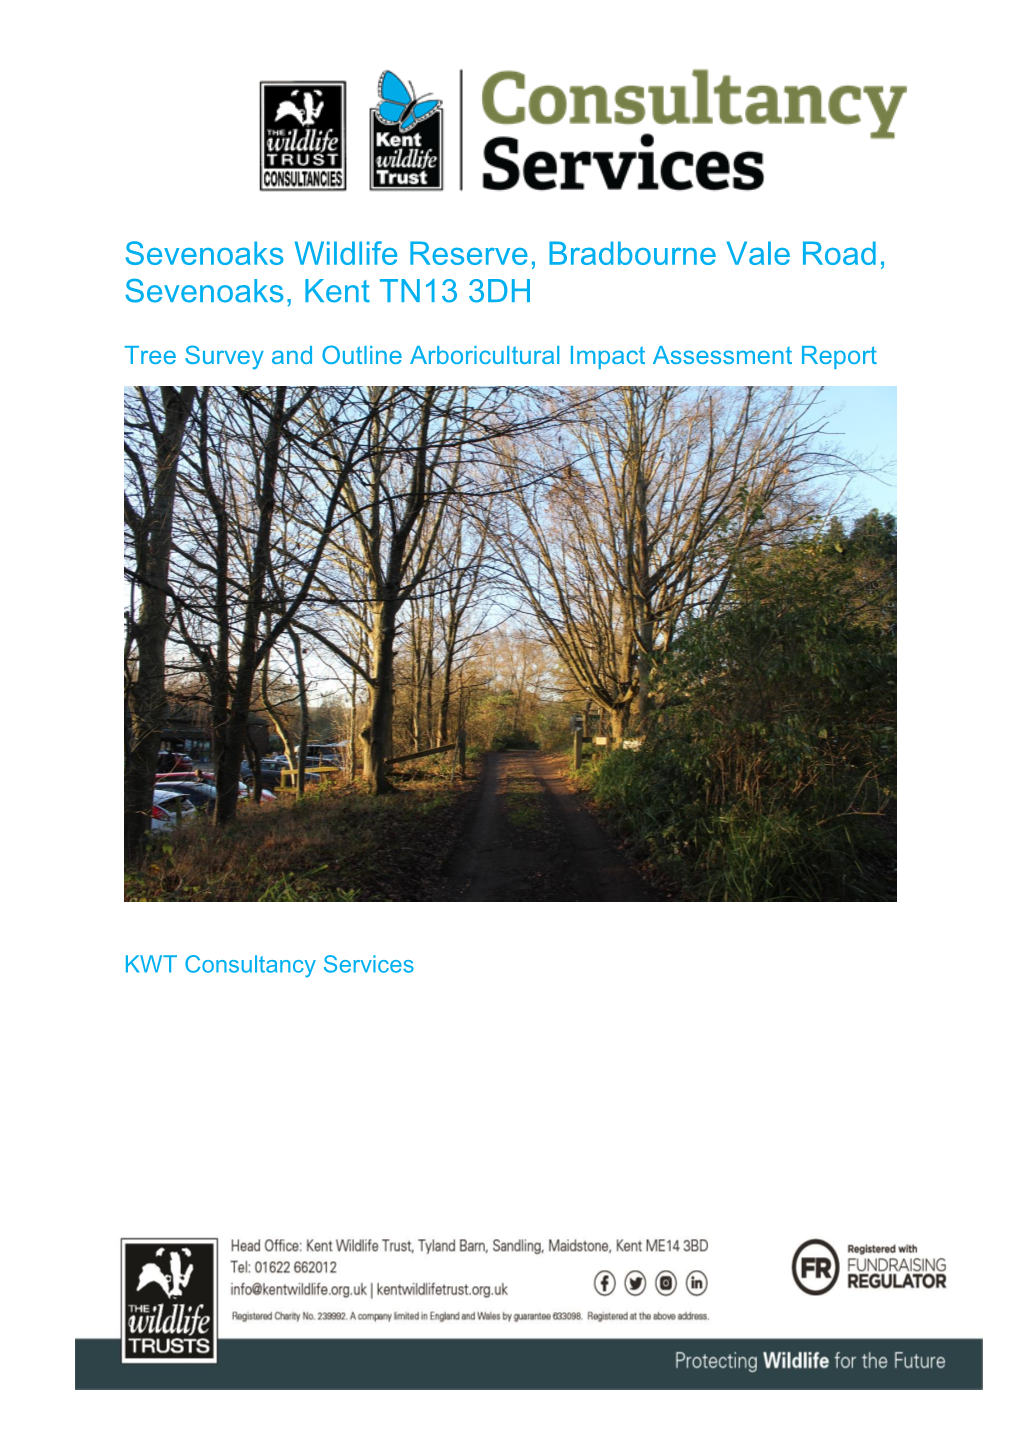 Sevenoaks Wildlife Reserve, Bradbourne Vale Road, Sevenoaks, Kent TN13 3DH